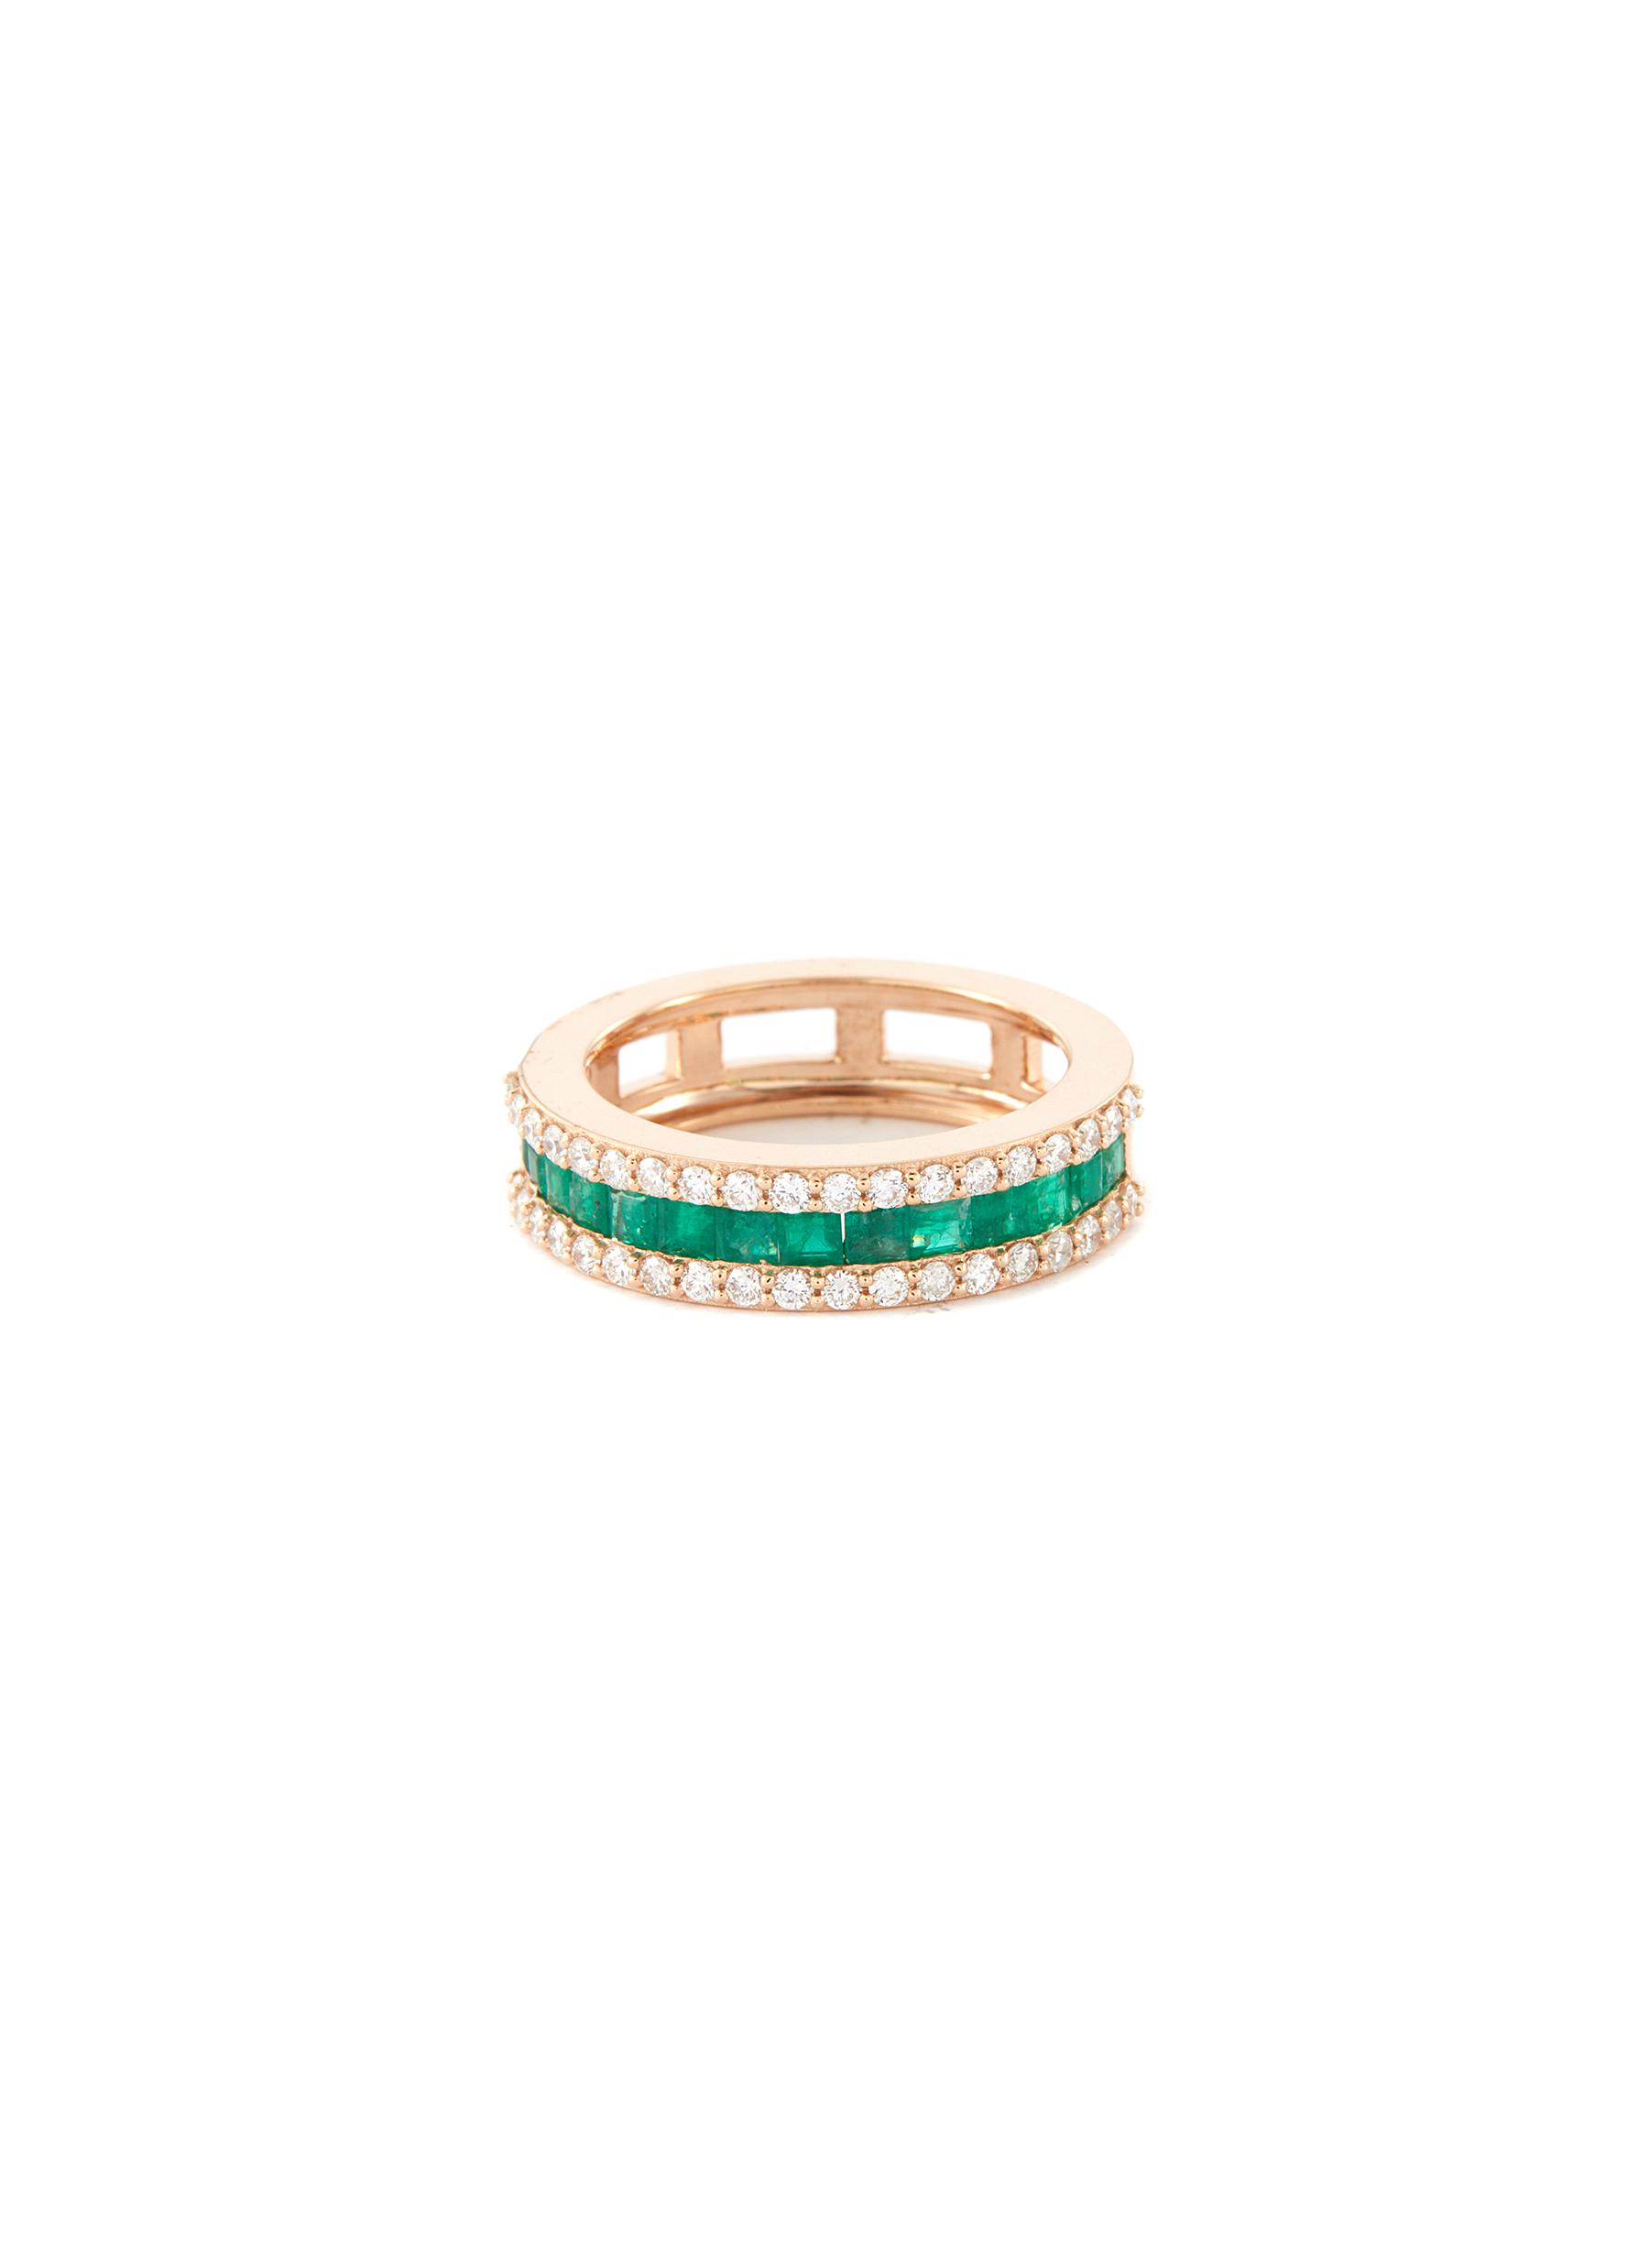 BEE GODDESS 'Mondrian' Diamond Emerald 14k Gold Ring